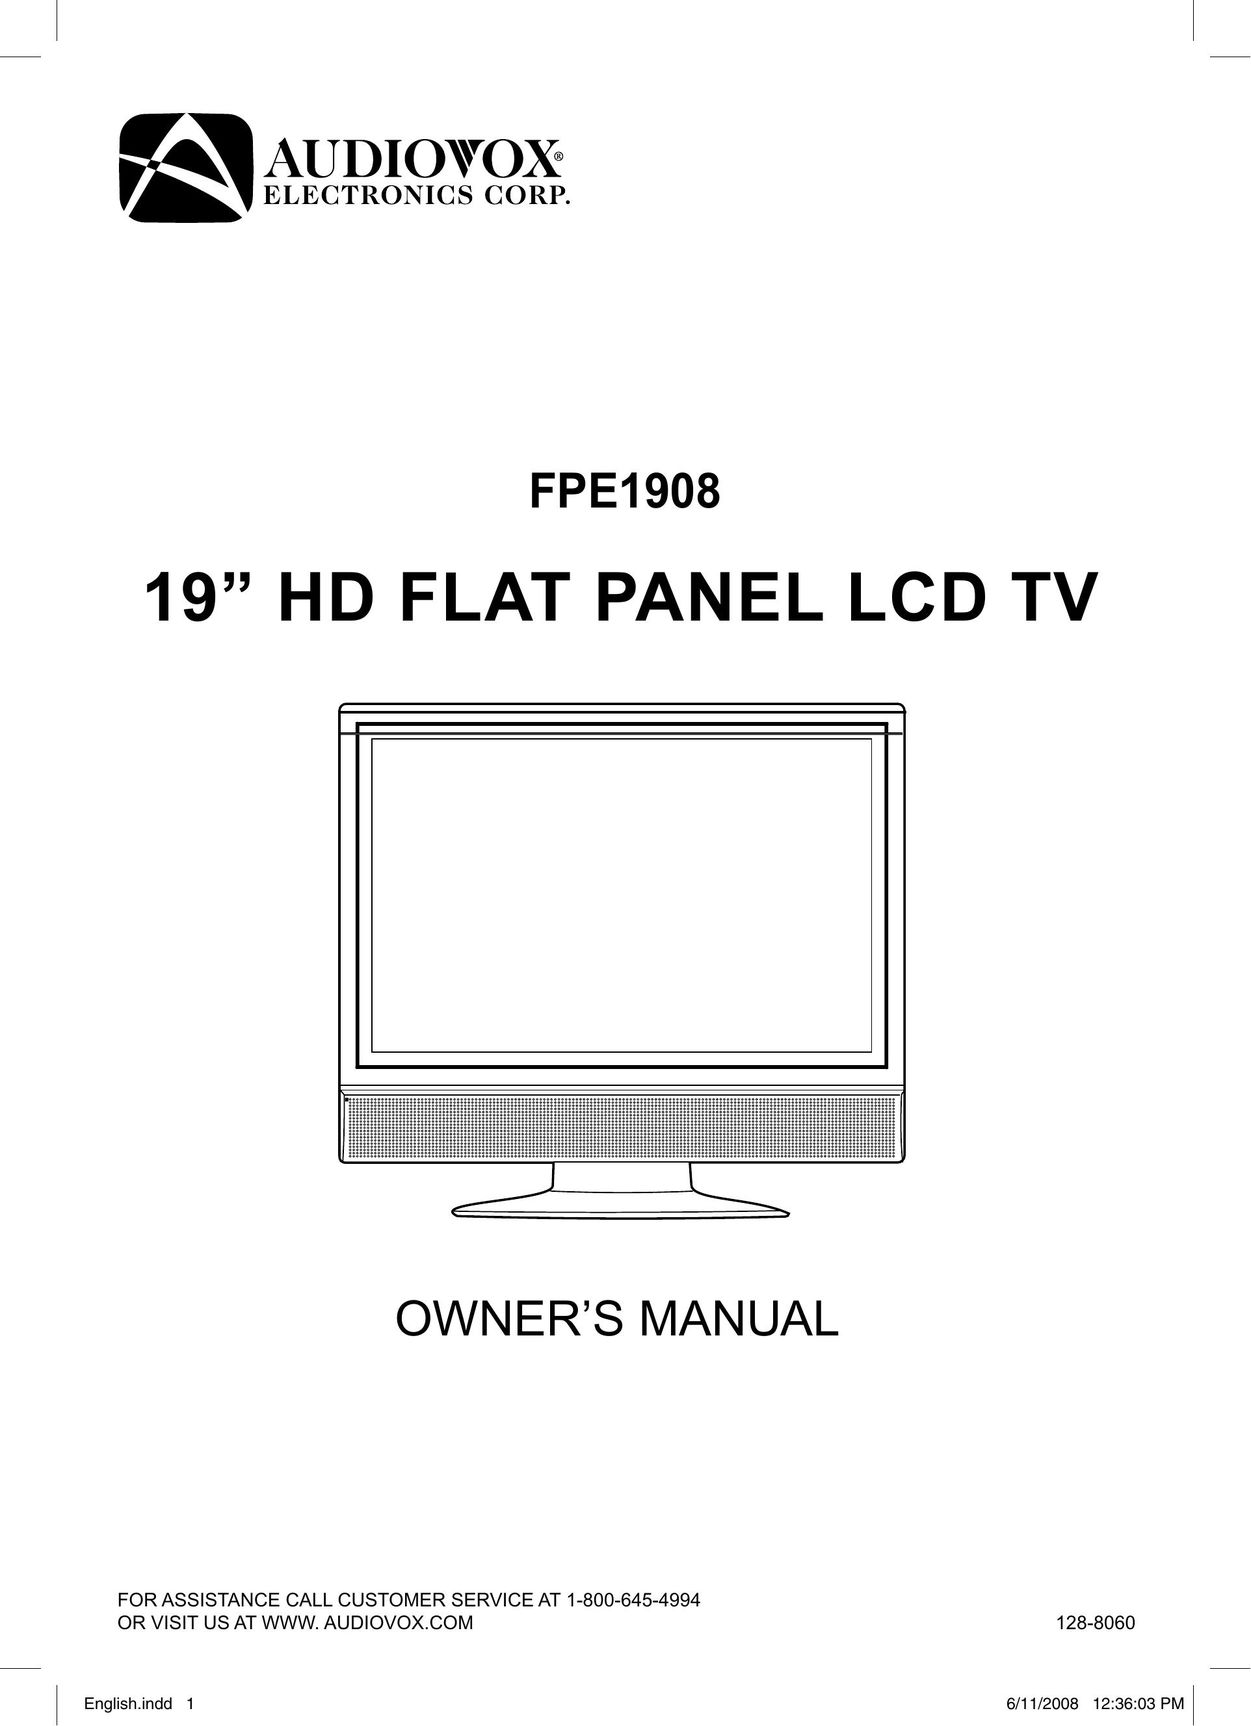 Audiovox FPE1908 Flat Panel Television User Manual